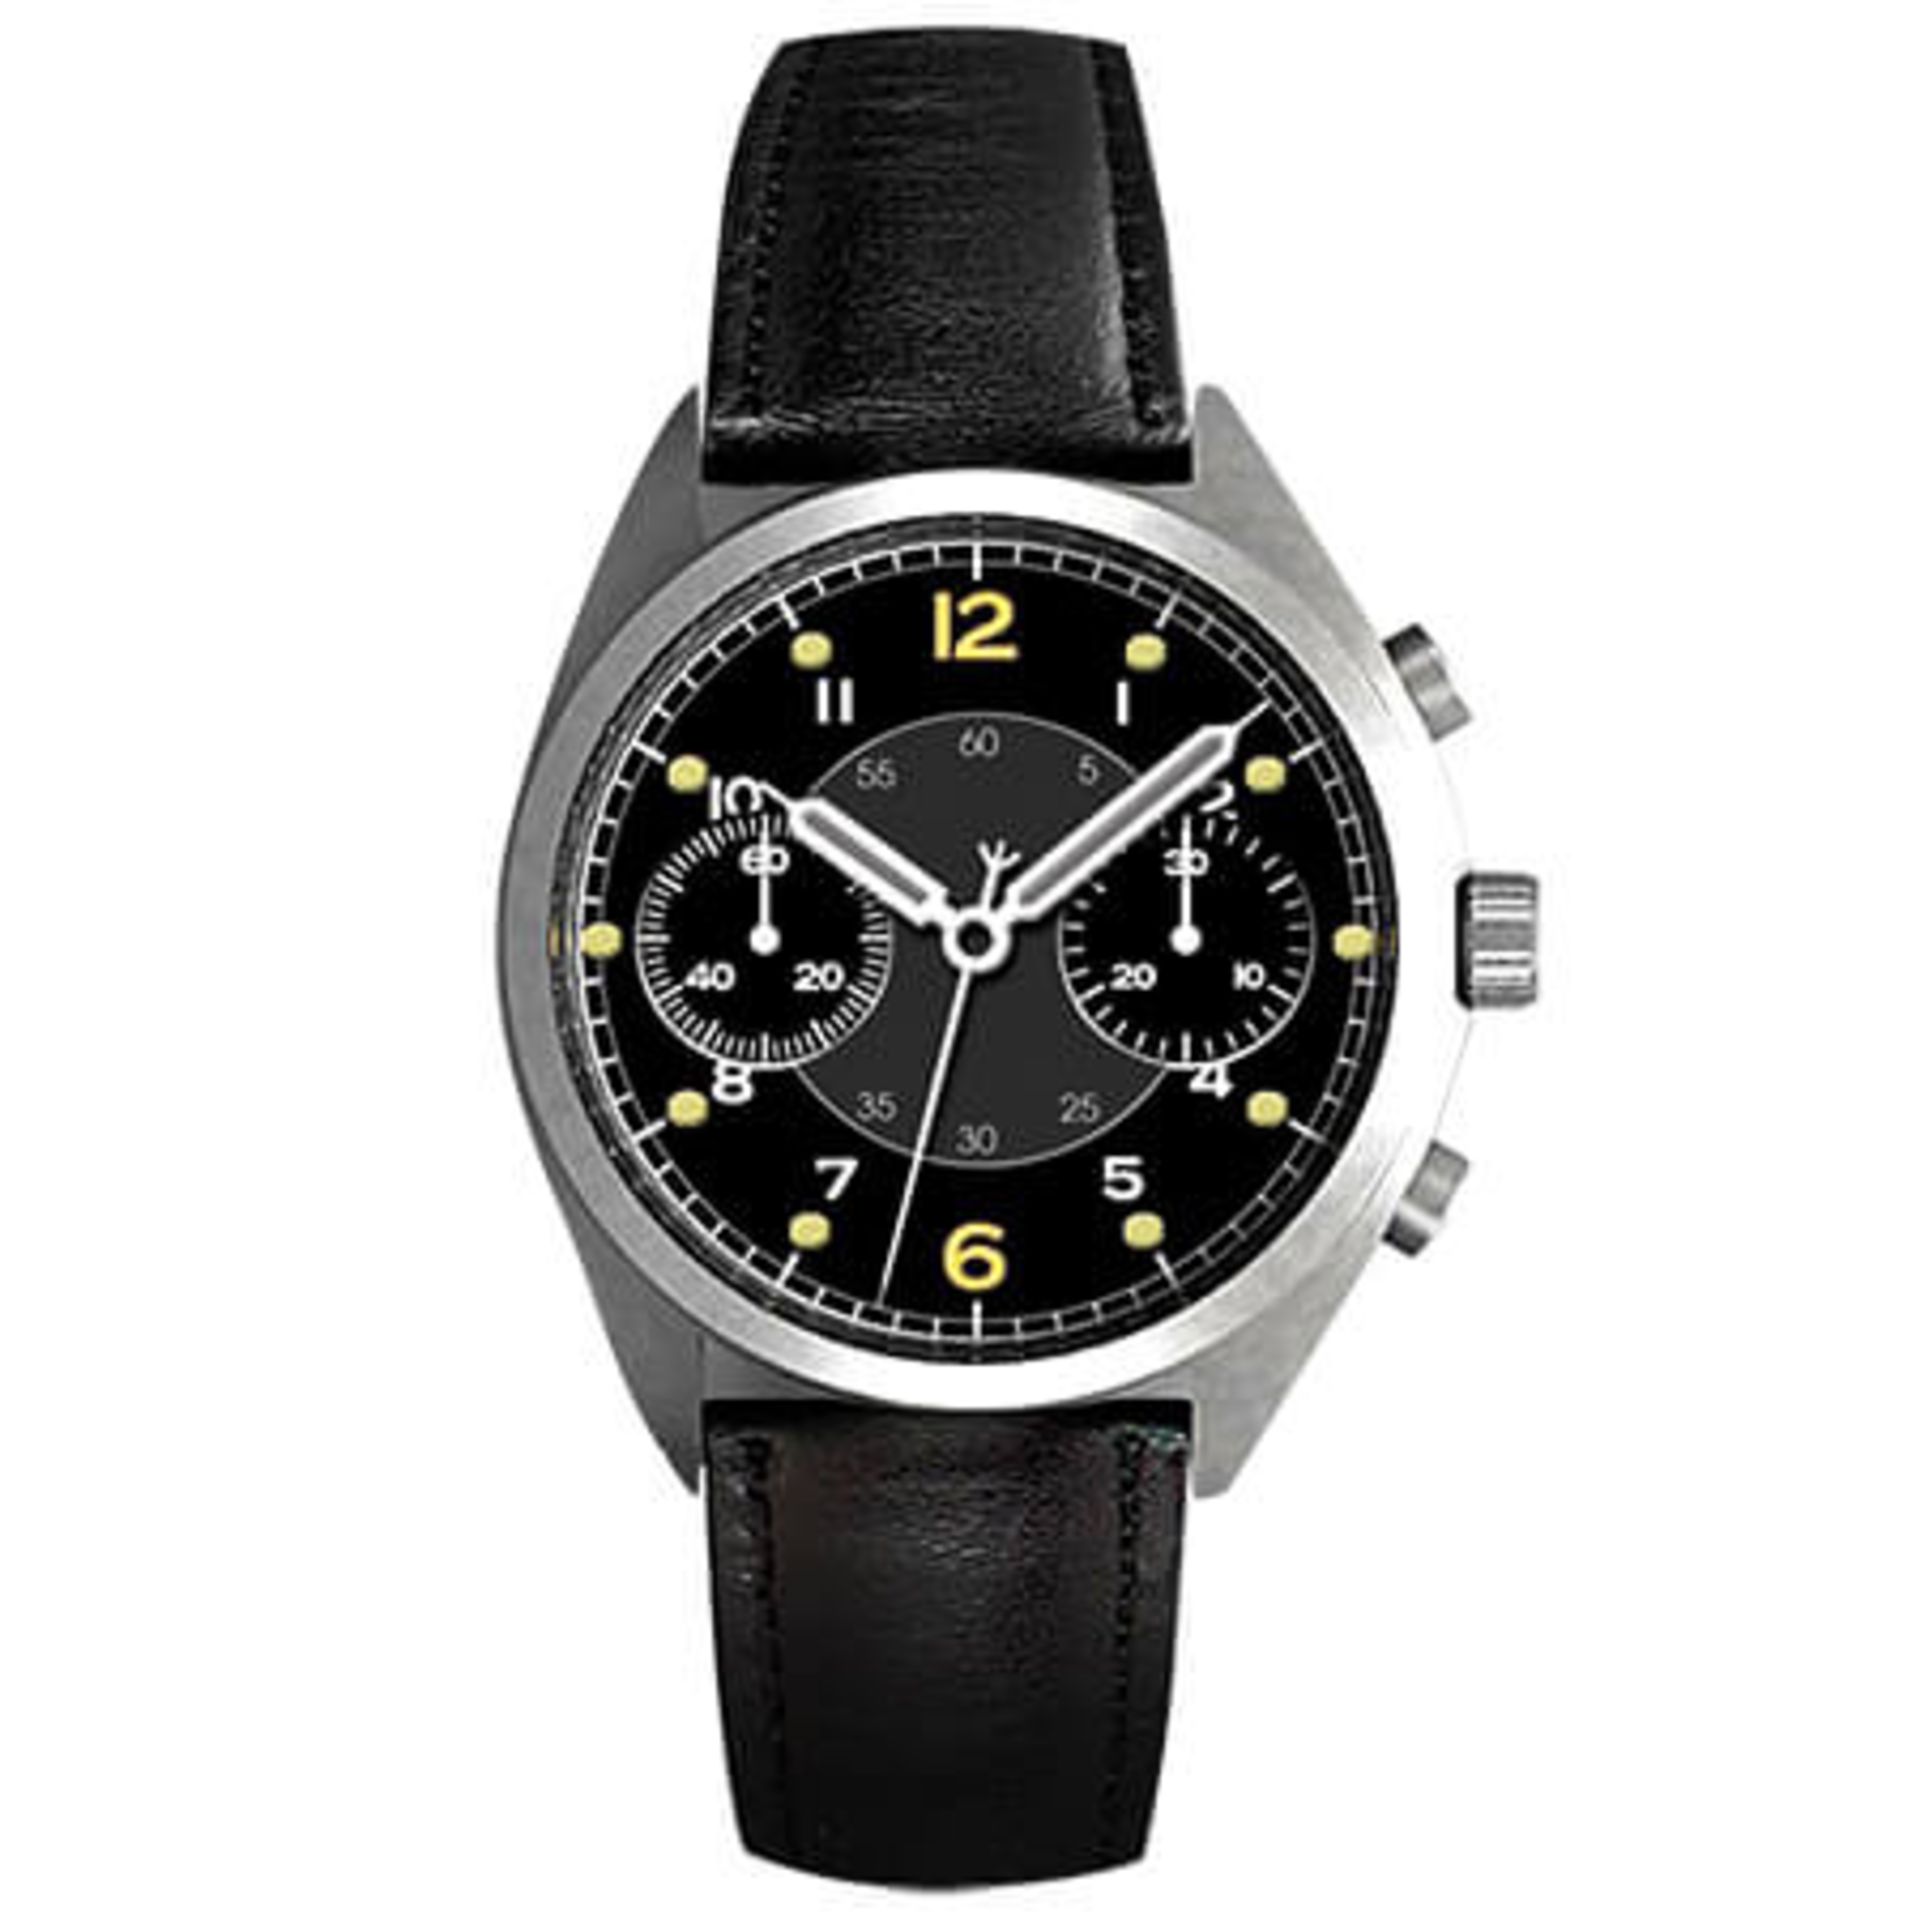 V Brand New Gents 1950s British RAF Chronograph Watch